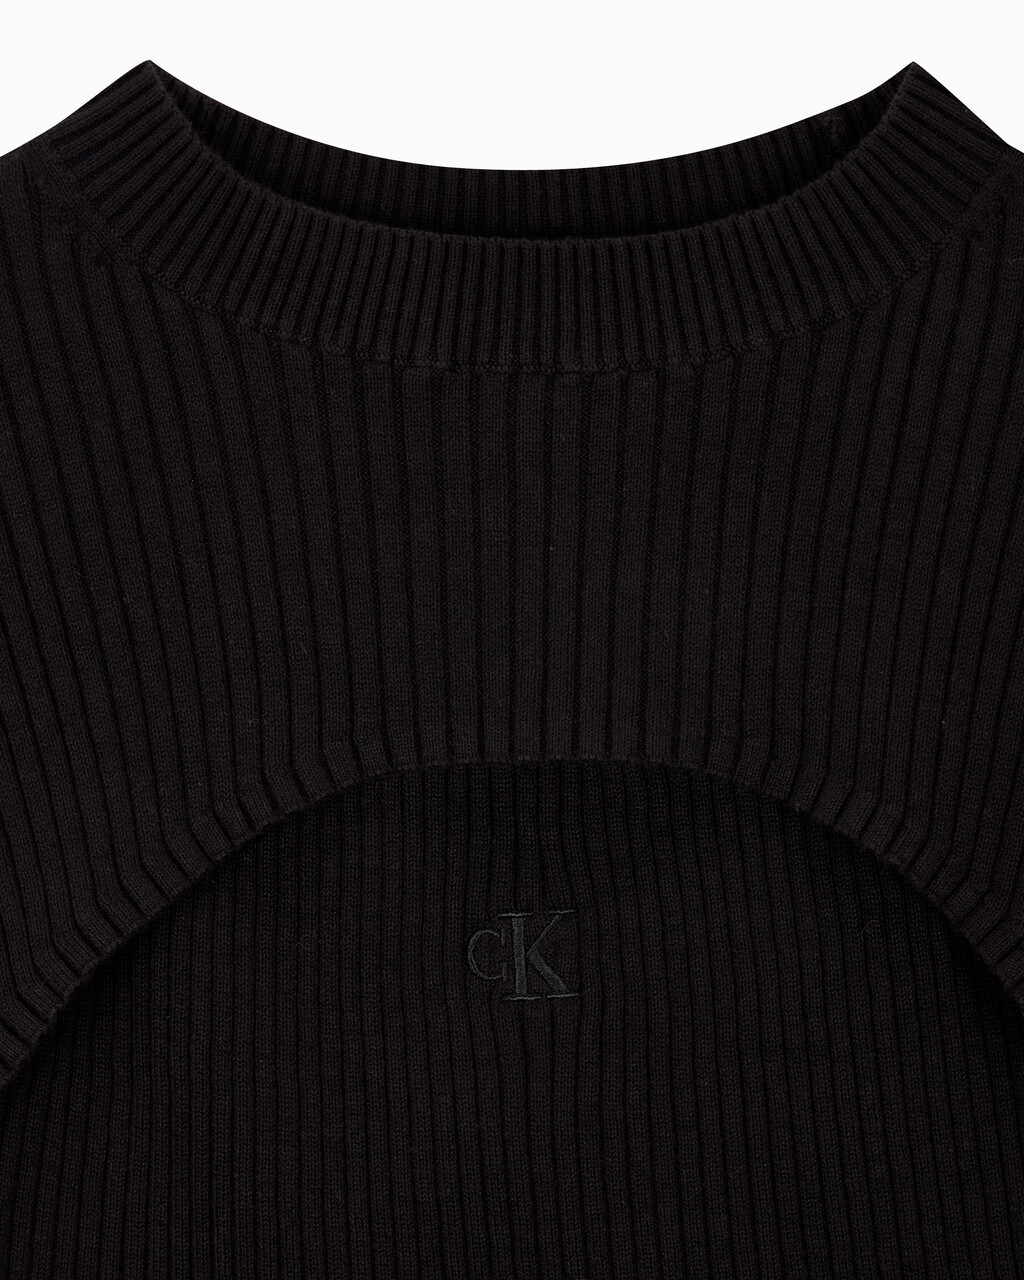 Buy 여성 3 IN 1 립 반팔 스웨터 in color CK BLACK